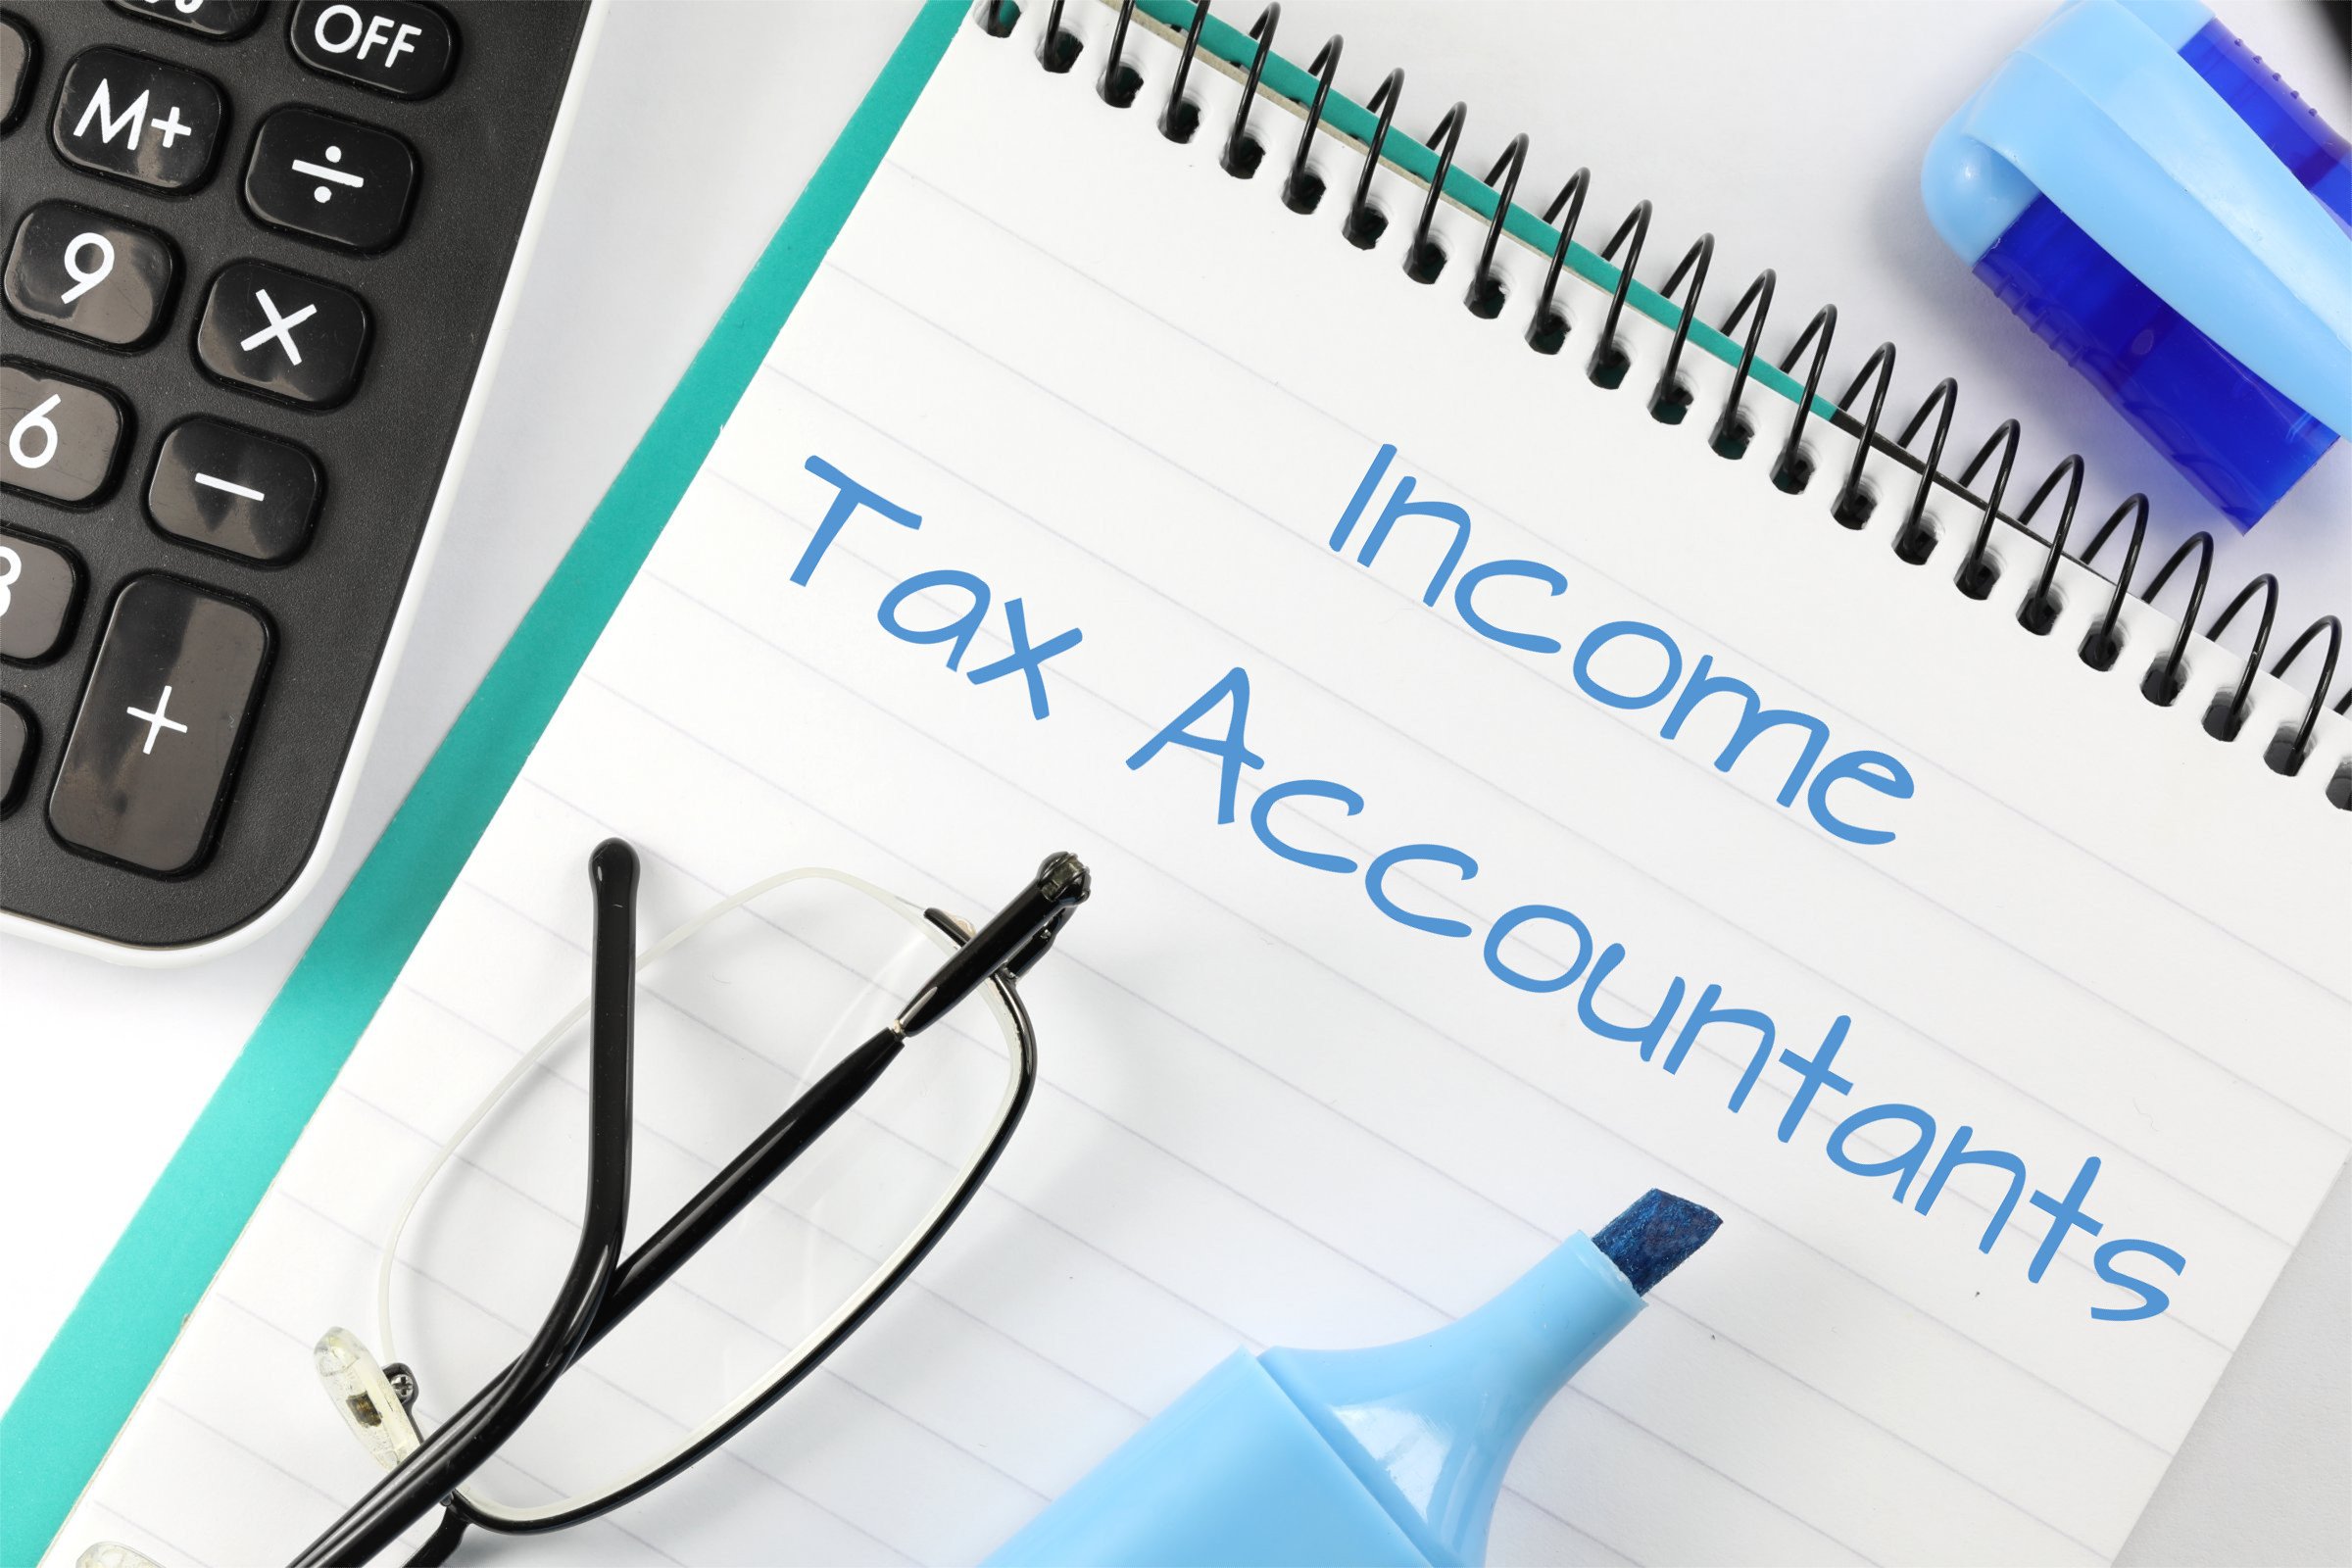 income tax accountants